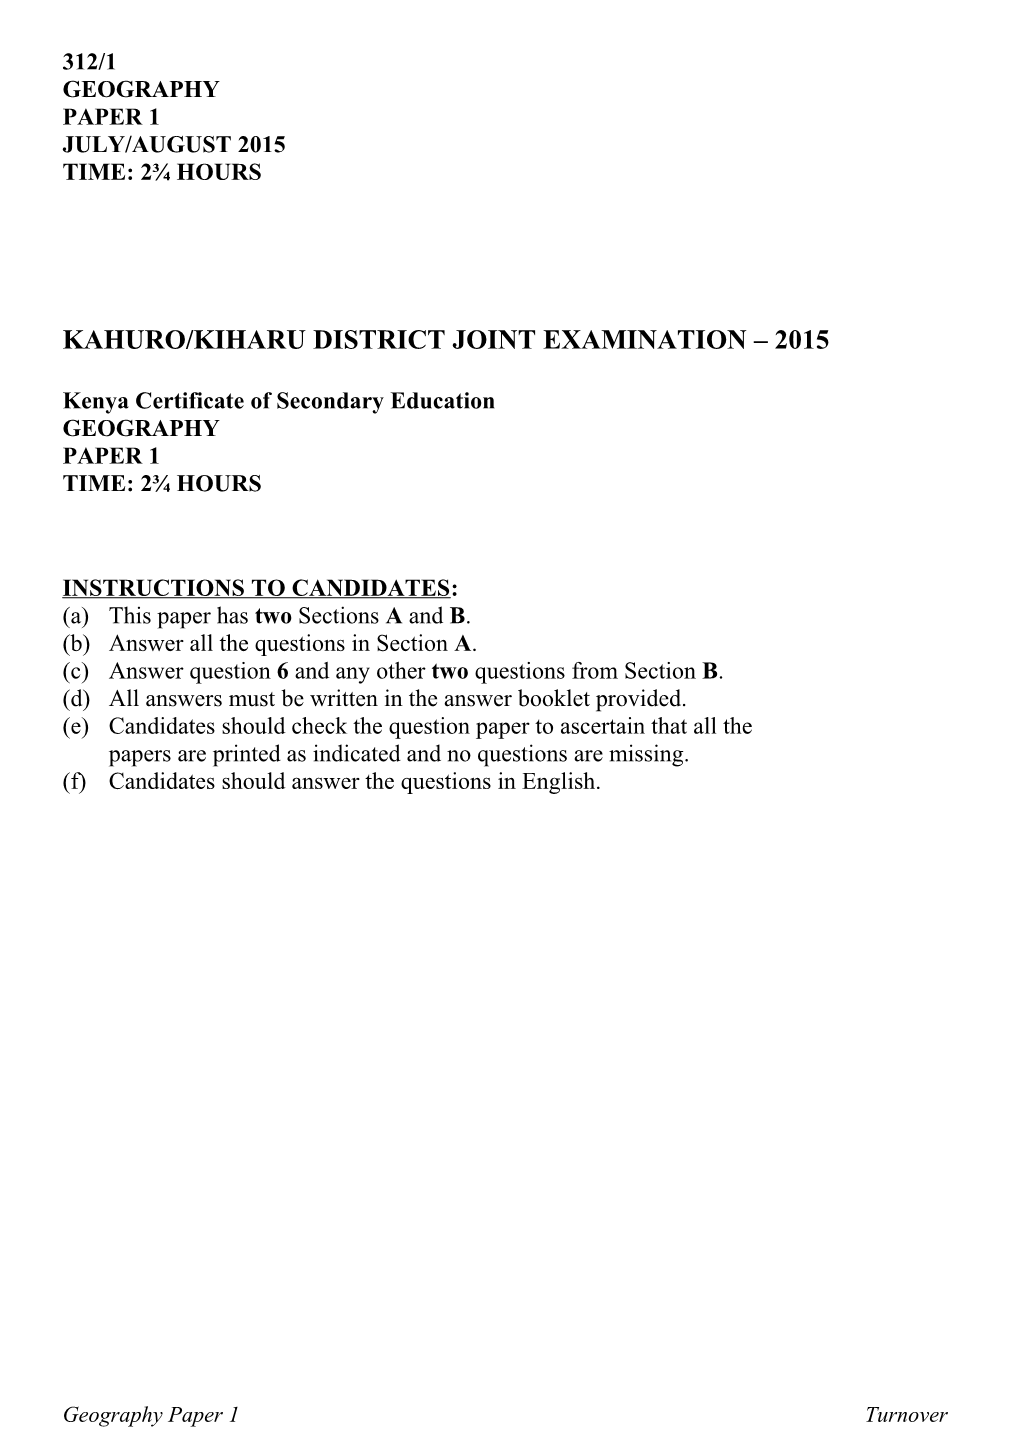 Kahuro/Kiharudistrict Joint Examination 2015